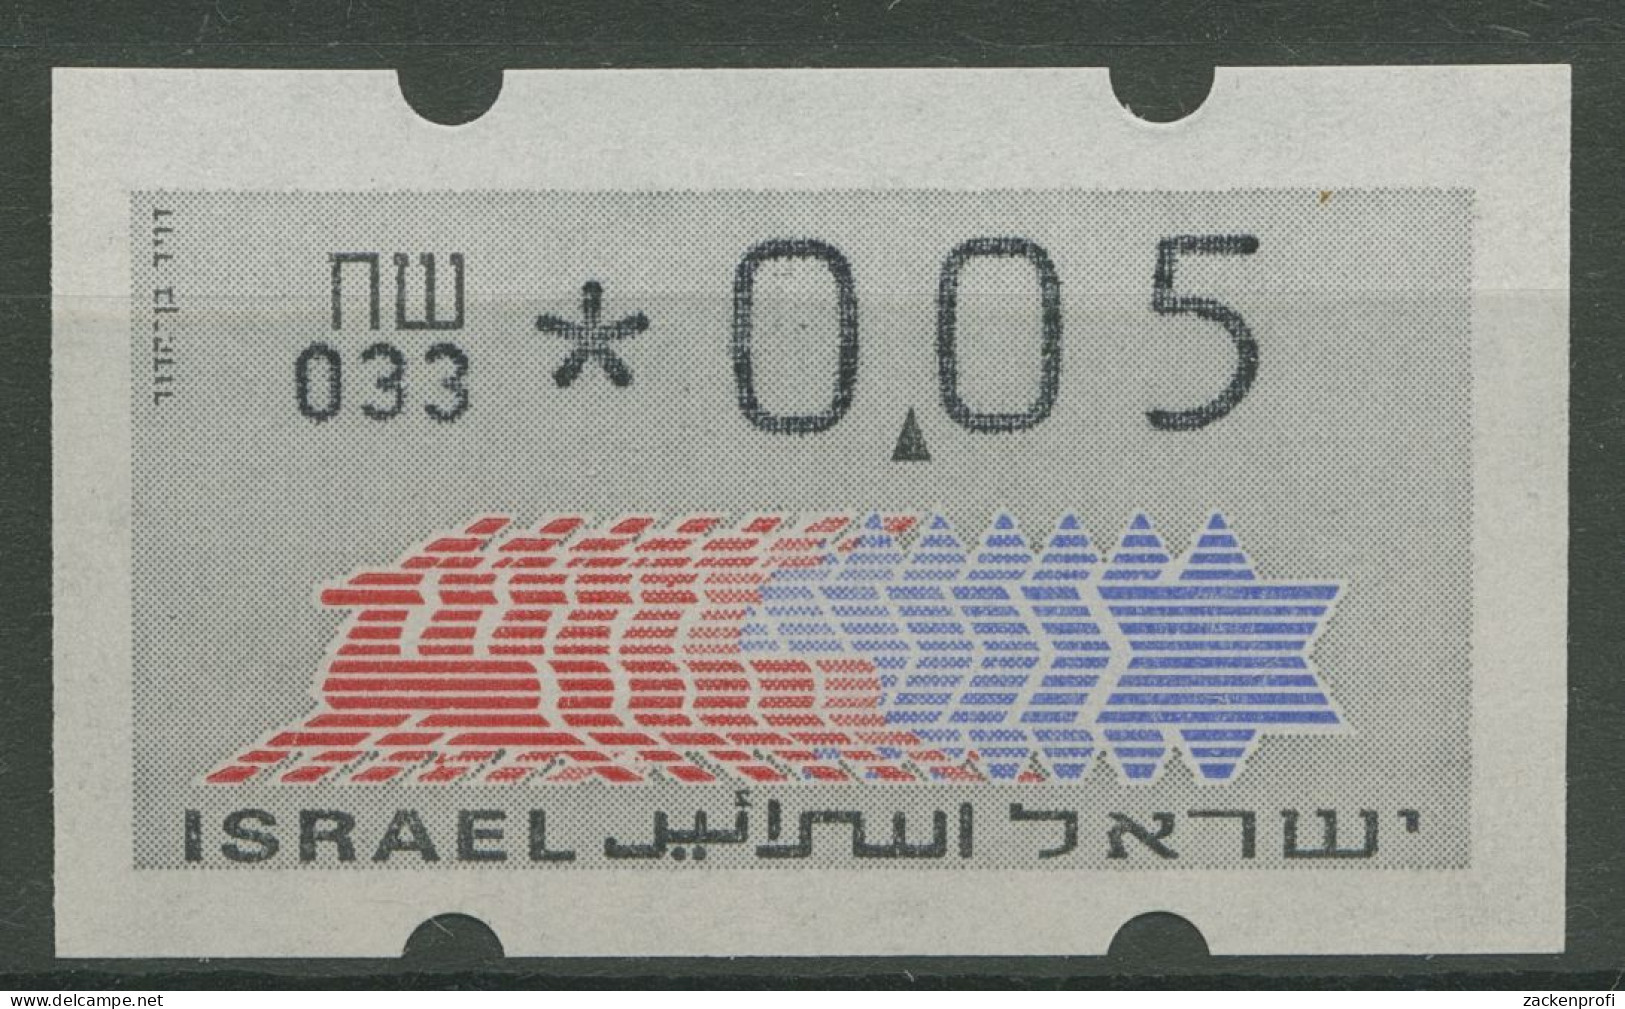 Israel ATM 1990 Hirsch Automat 033 Einzelwert ATM 3.3.33 Postfrisch - Frankeervignetten (Frama)